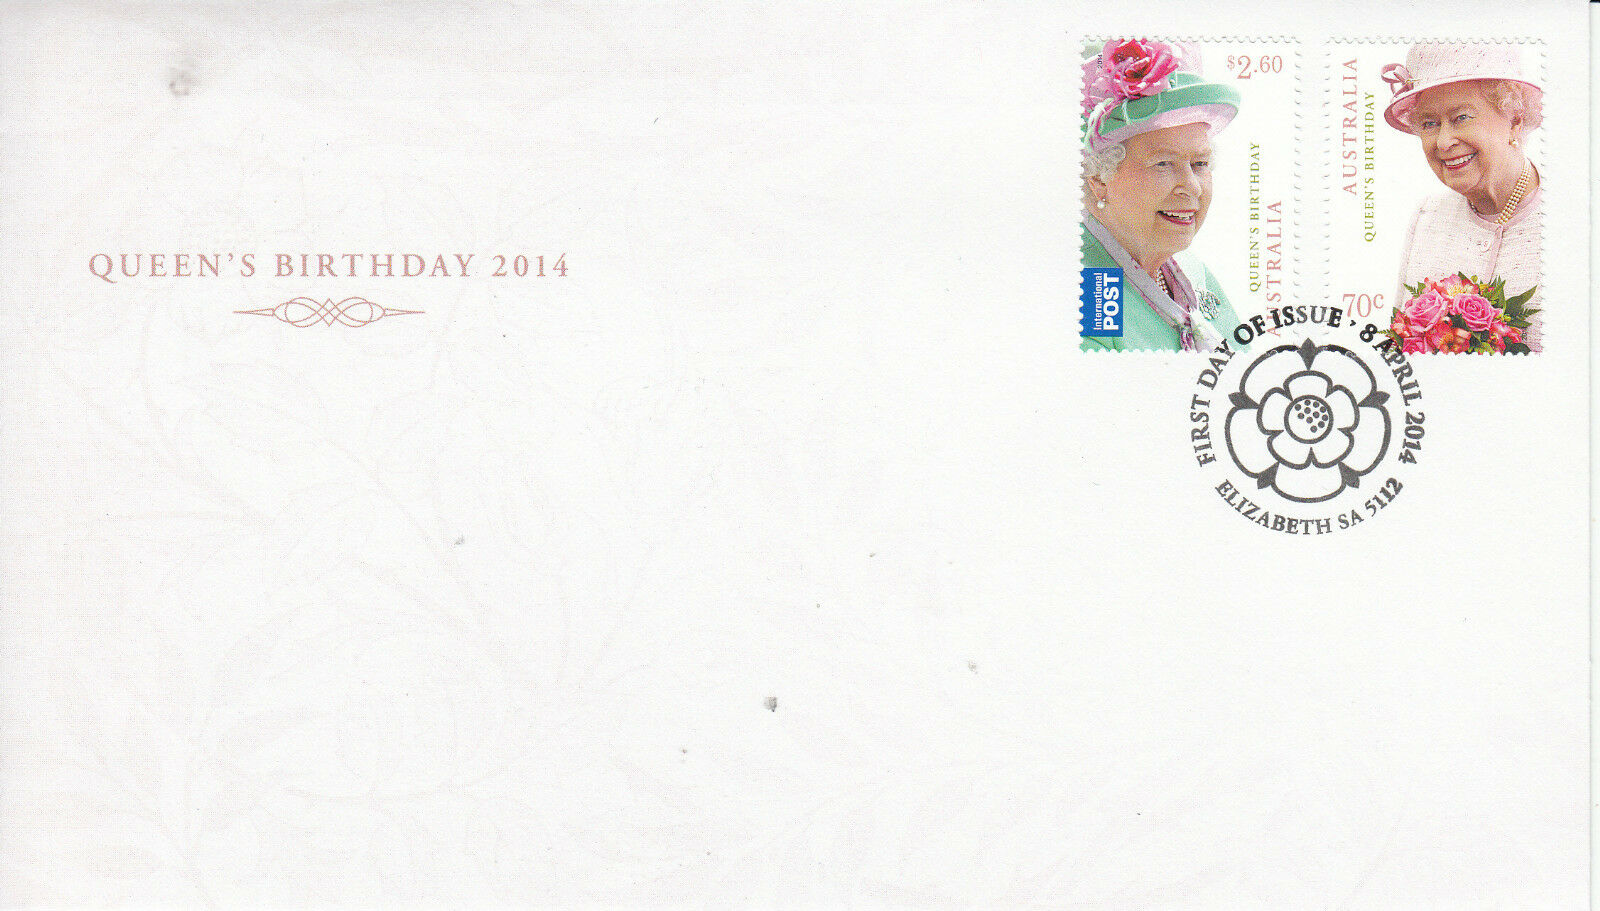 Australia 2014 FDC Queen's Birthday 2v Set Cover Elizabeth II Royal Ascot Hats